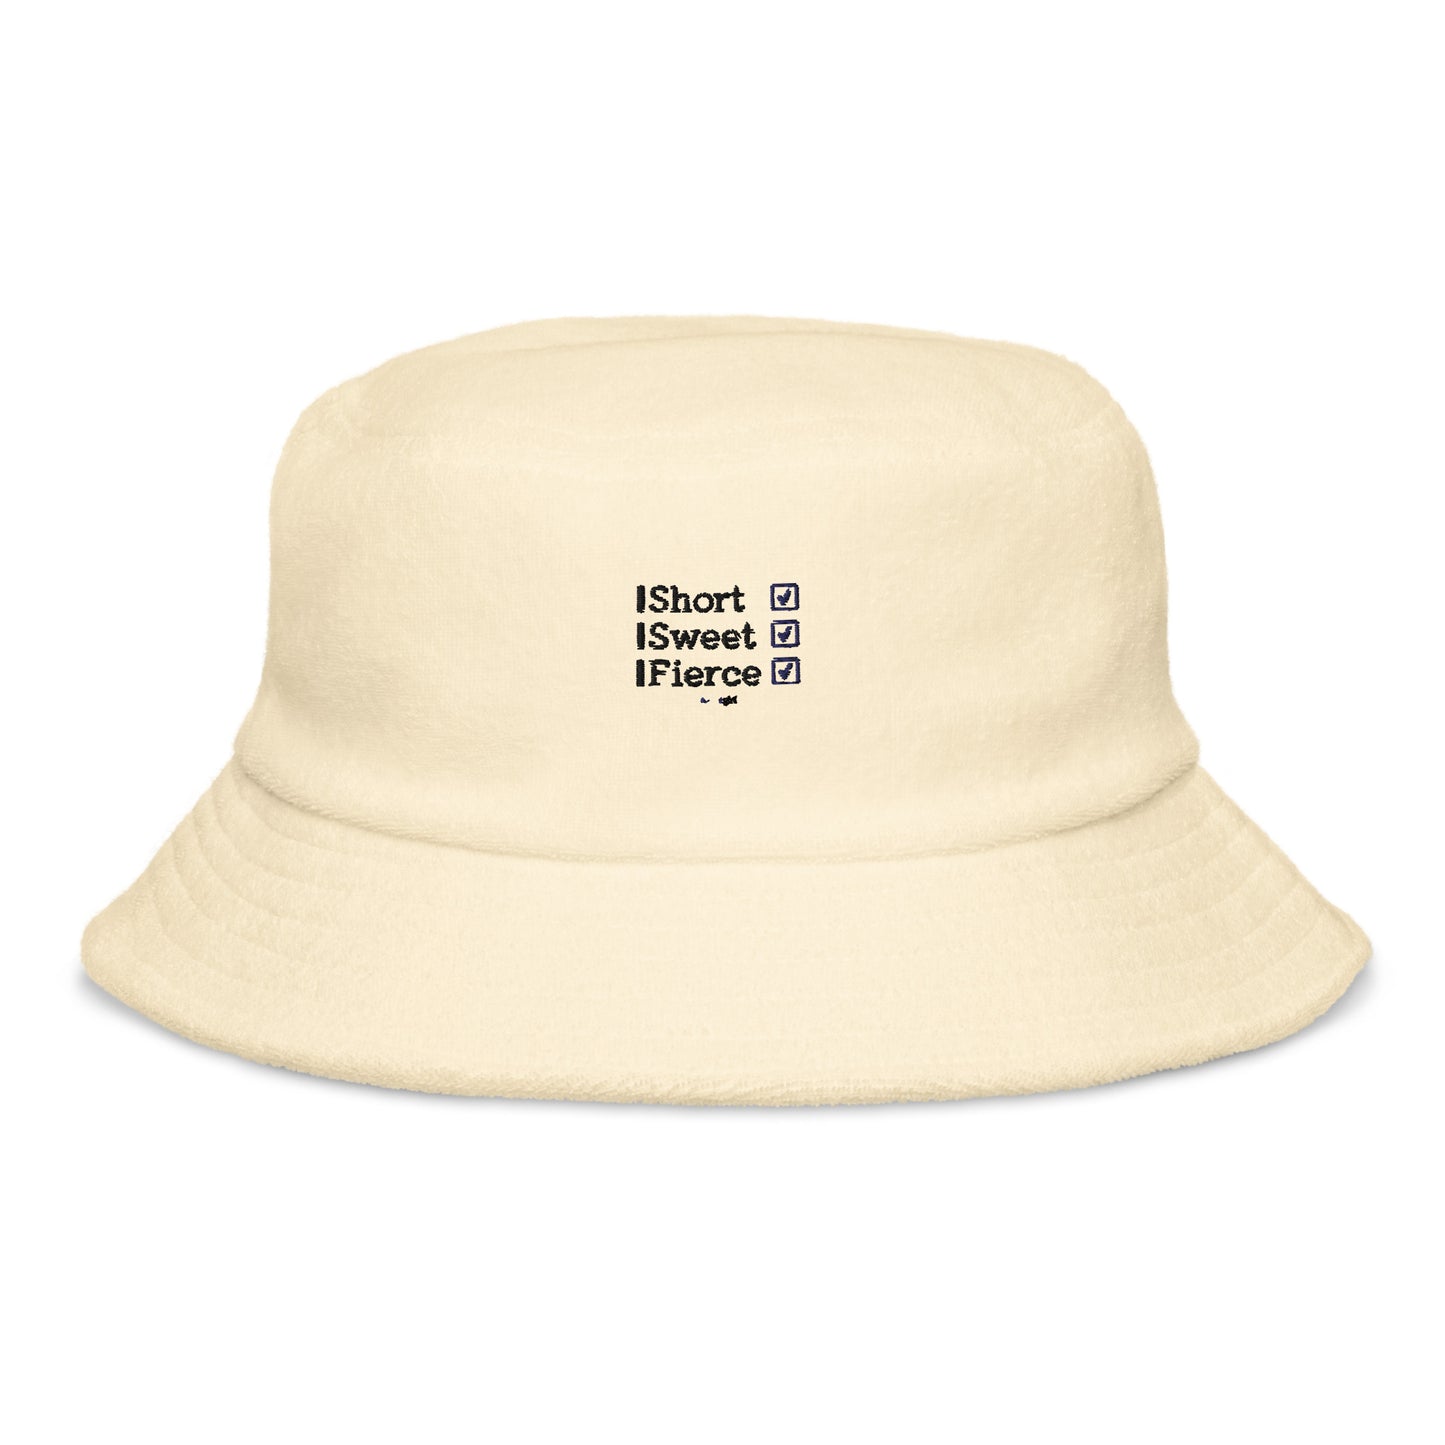 Terry cloth bucket hat - Short, Sweet, Fierce